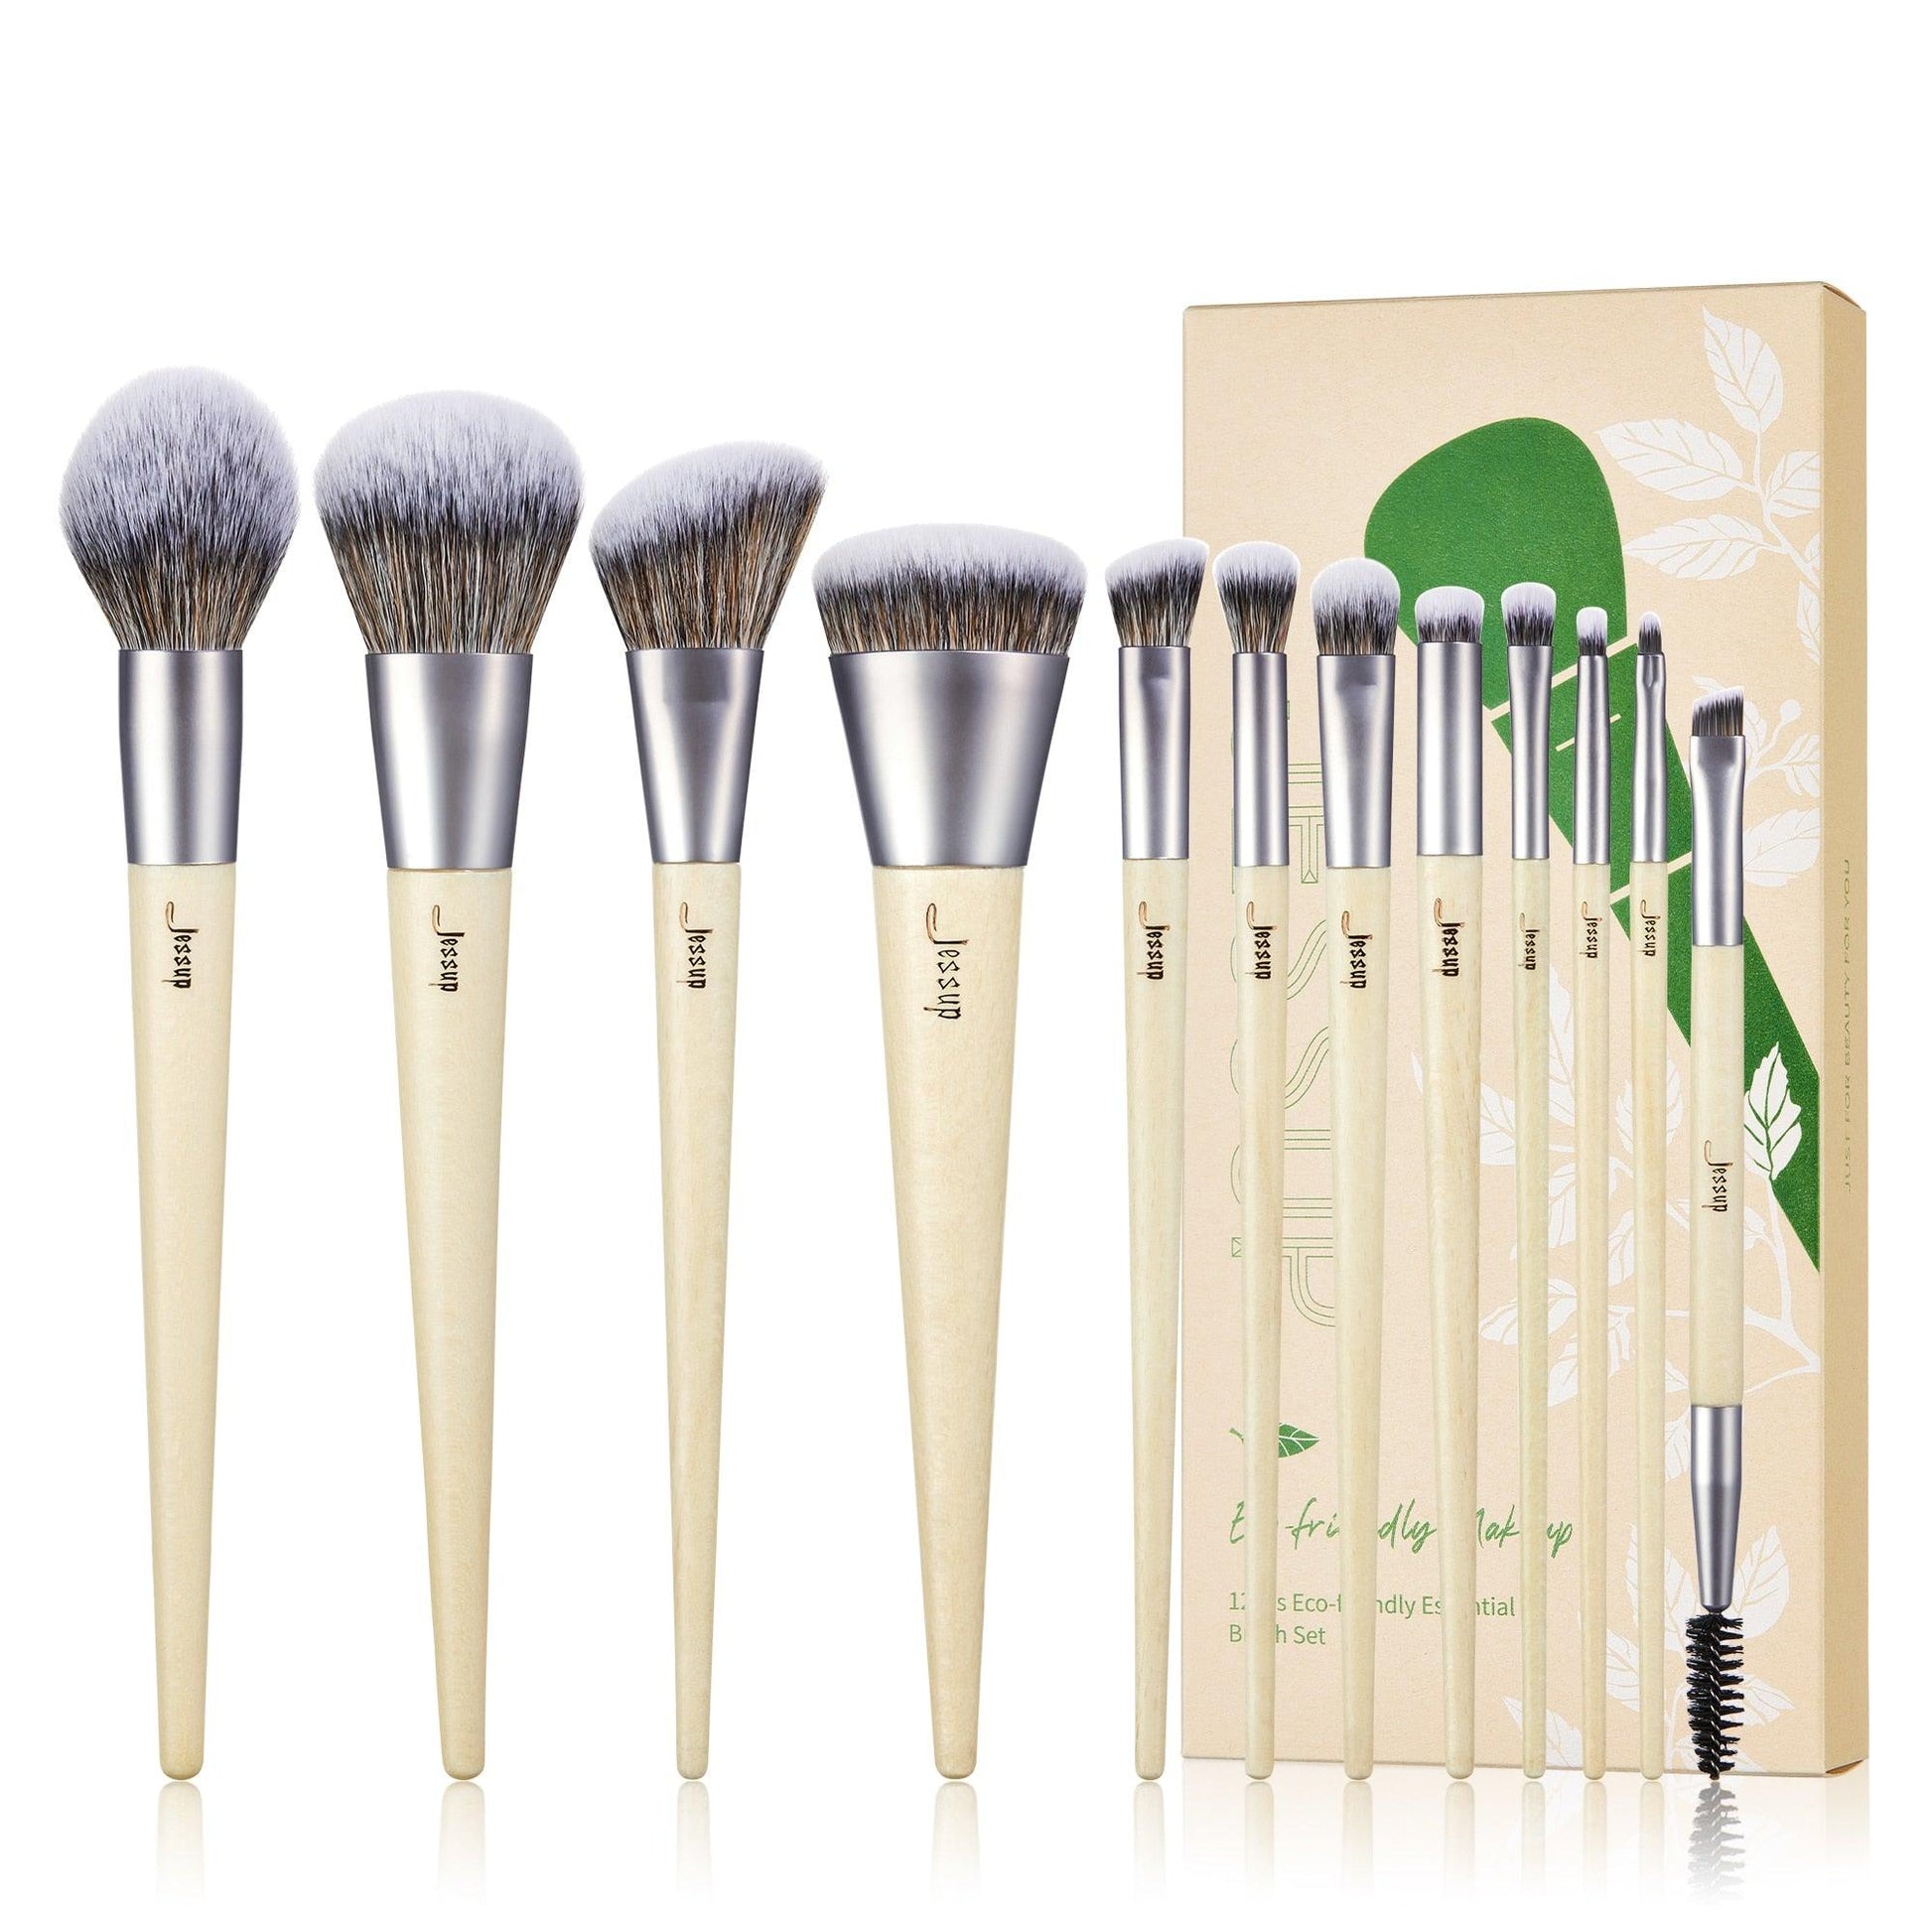 Jessup Makeup Brushes 10-14pcs Makeup Brush set, Synthetic Foundation Powder Contour Eyeshadow Liner Blending Highlight - Belleroz